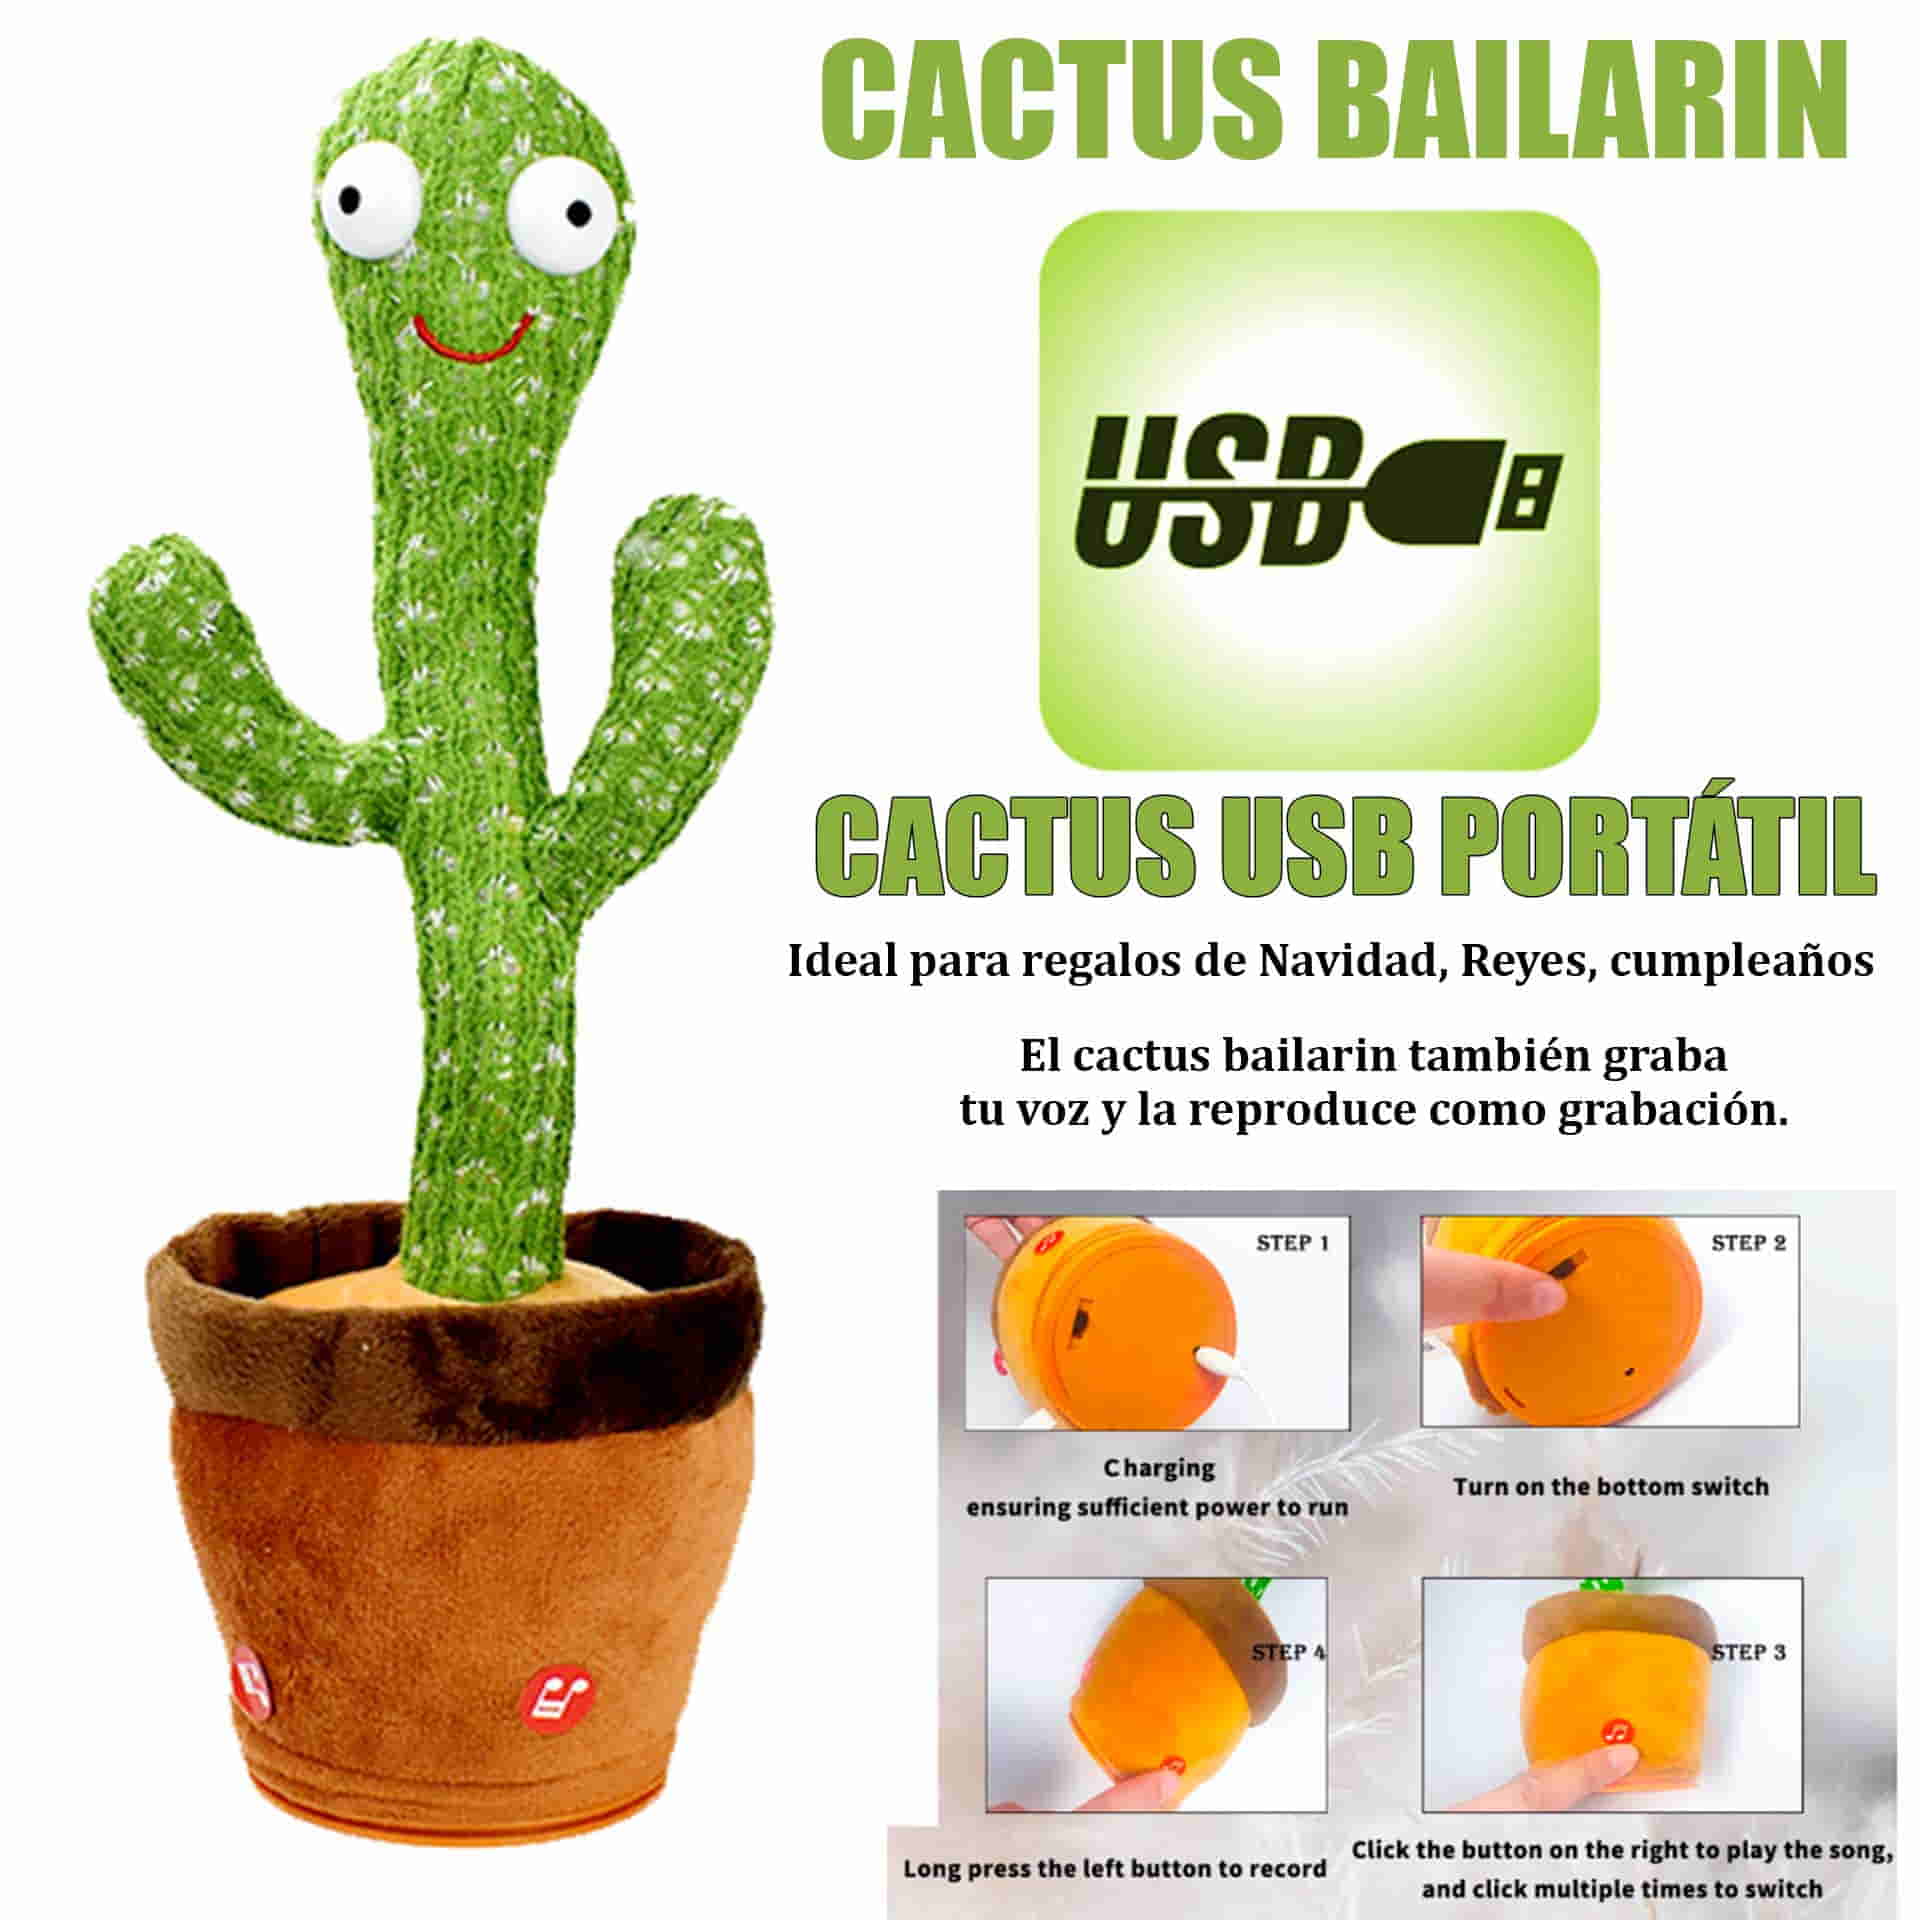 Cactus bailarin USB